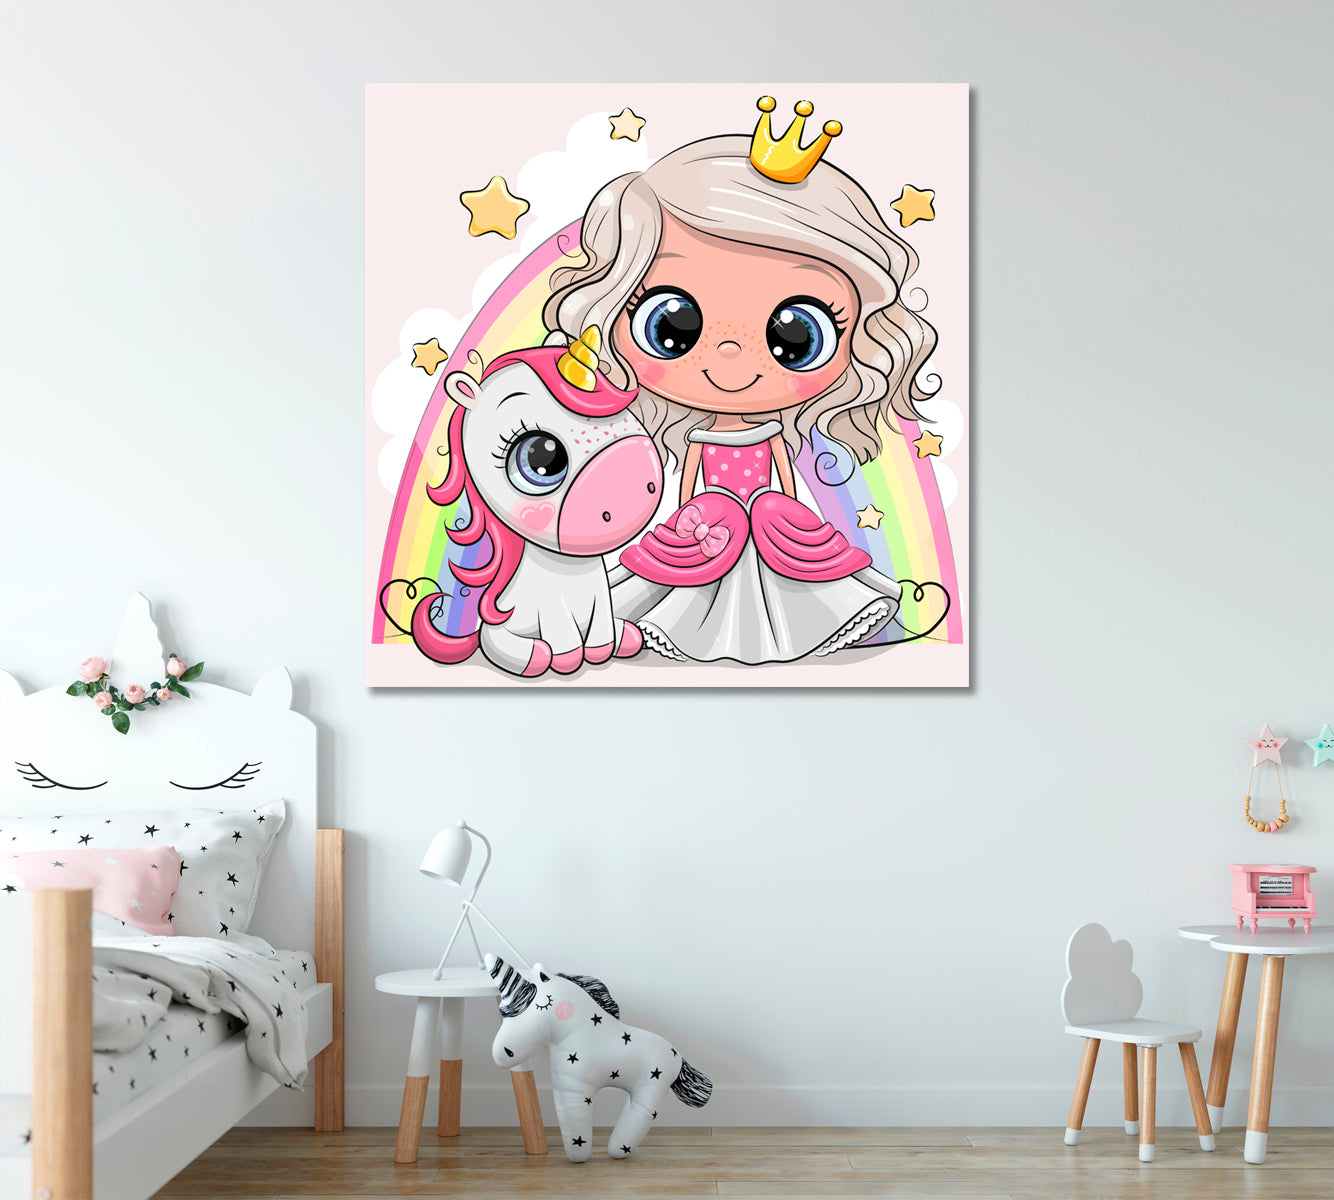 Cute Princess and Unicorn Canvas Print ArtLexy 1 Panel 12"x12" inches 